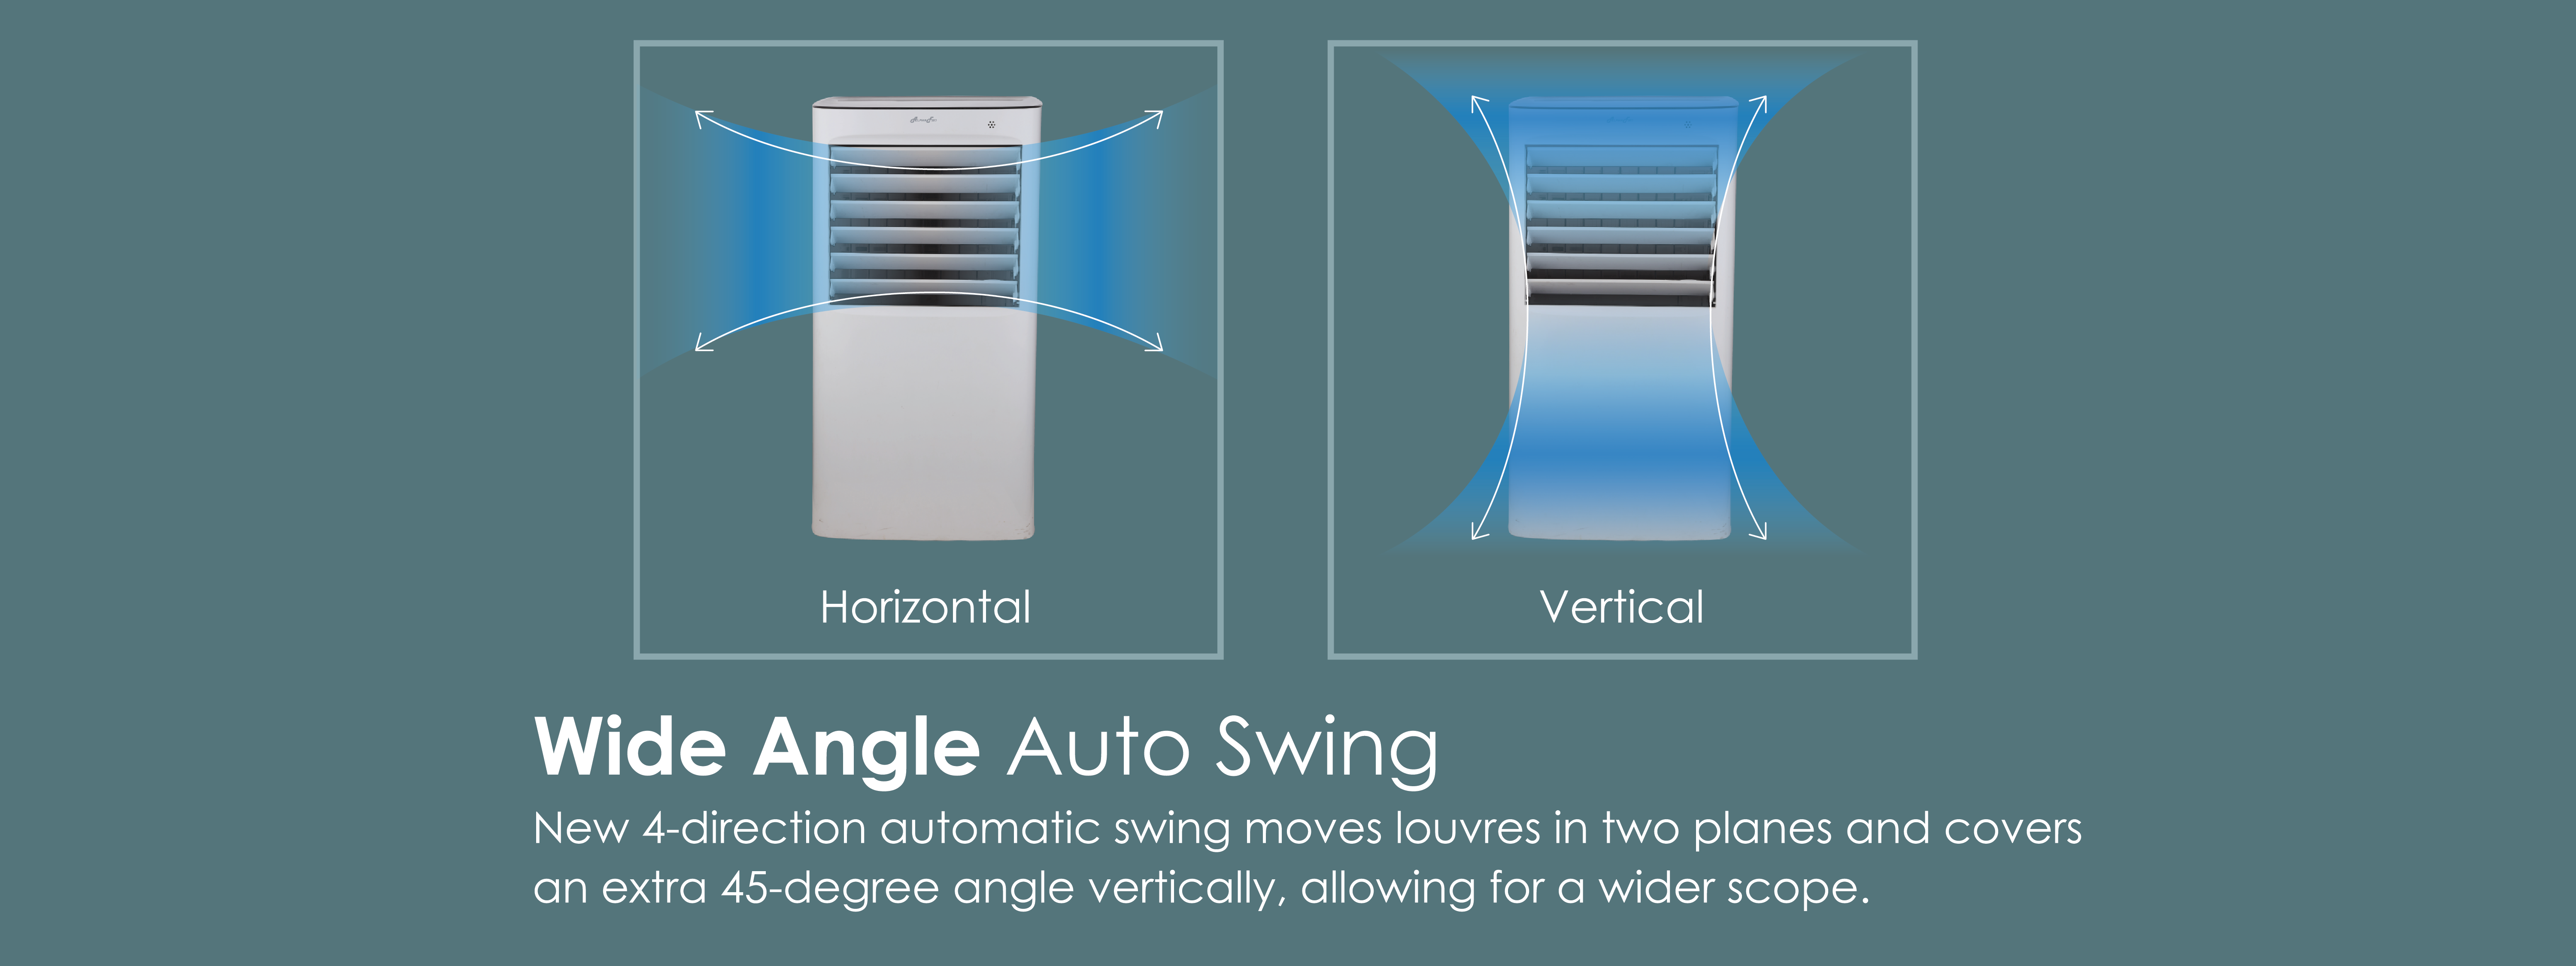 Wide Angle Auto Swing